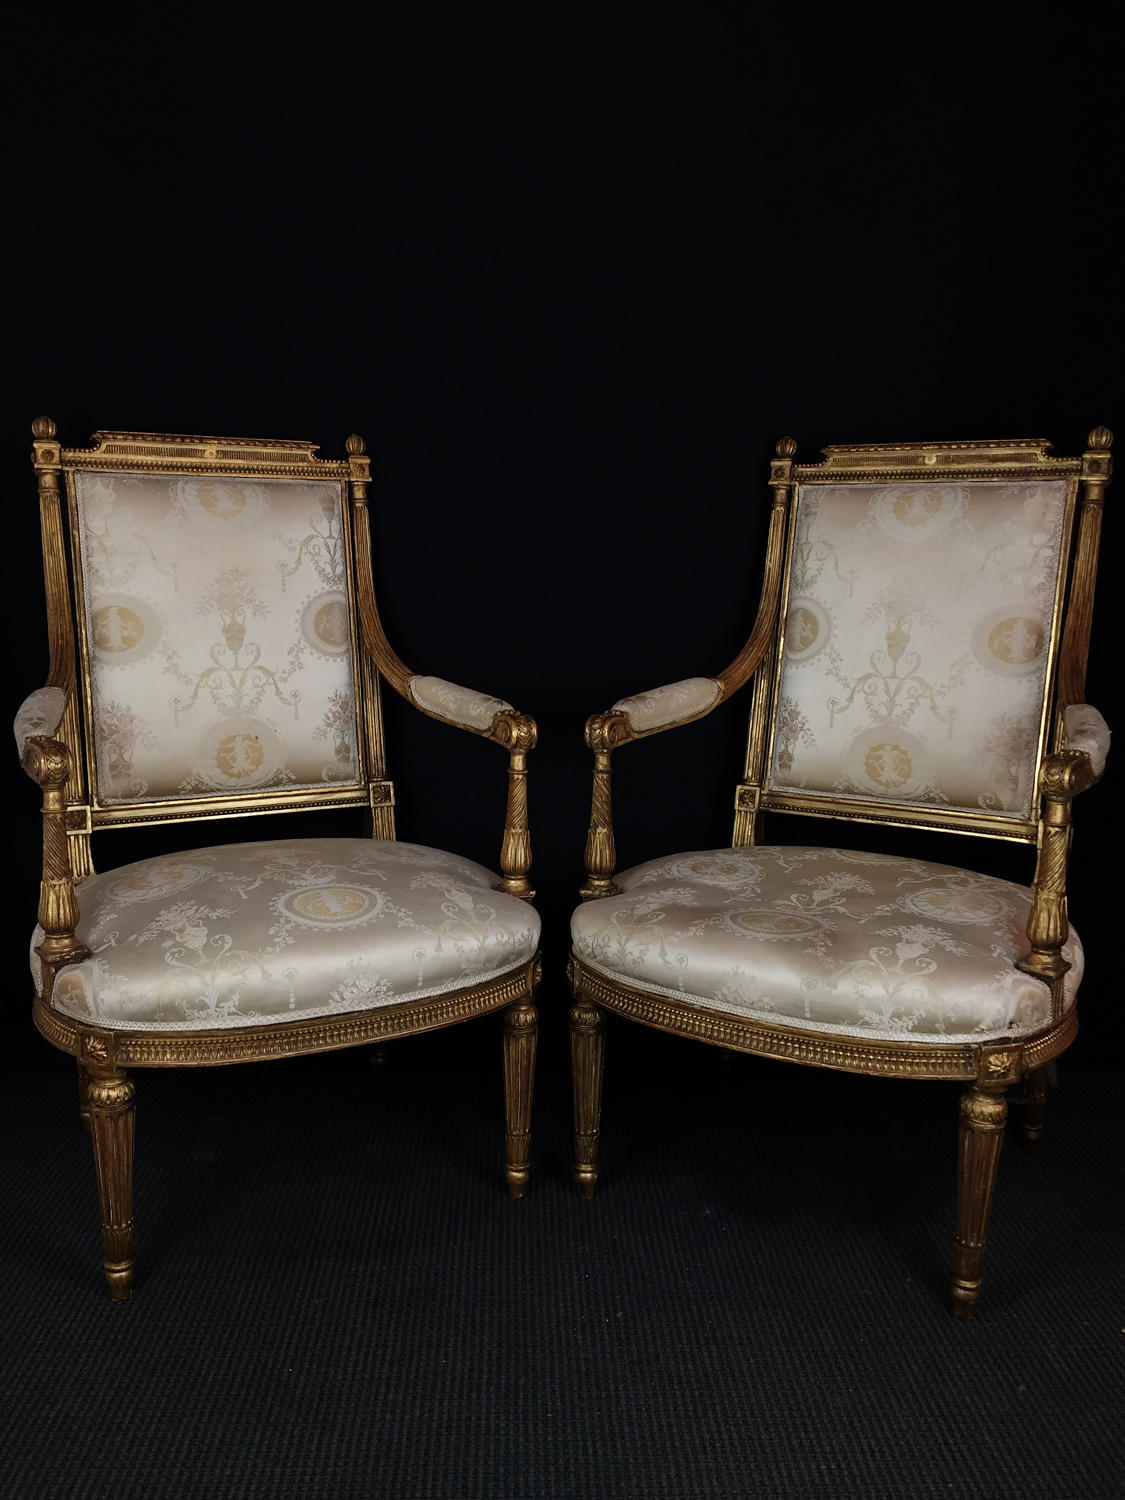 A Pair of Italian Louis XVI Style Arm Chairs